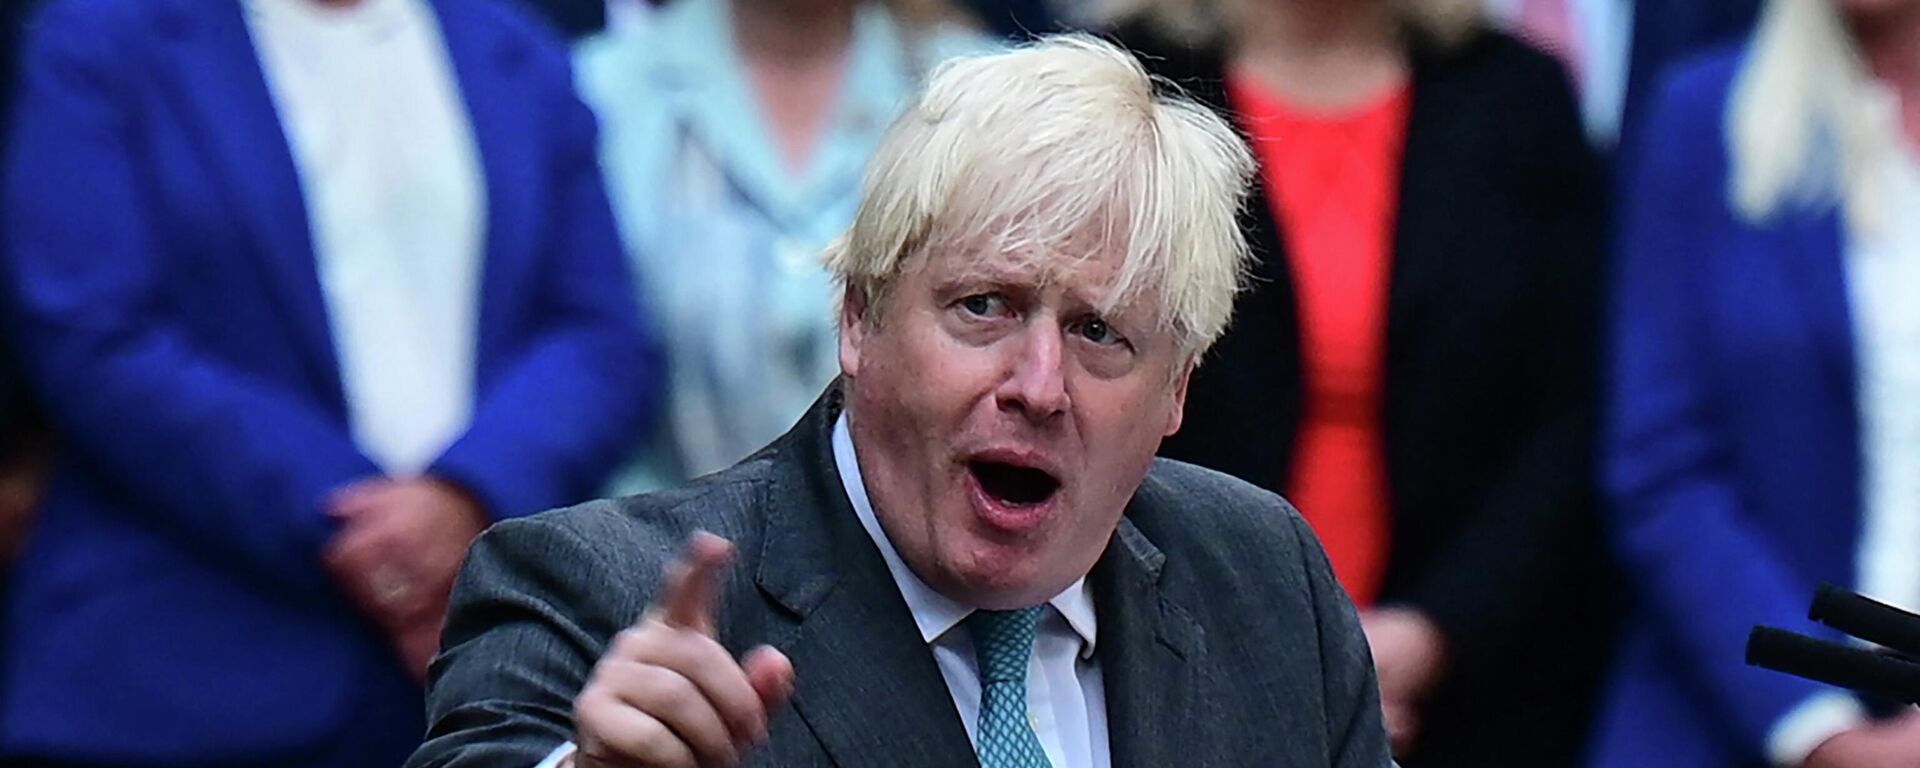 Boris Johnson delivers his final speech outside 10 Downing Street - Sputnik International, 1920, 06.09.2022